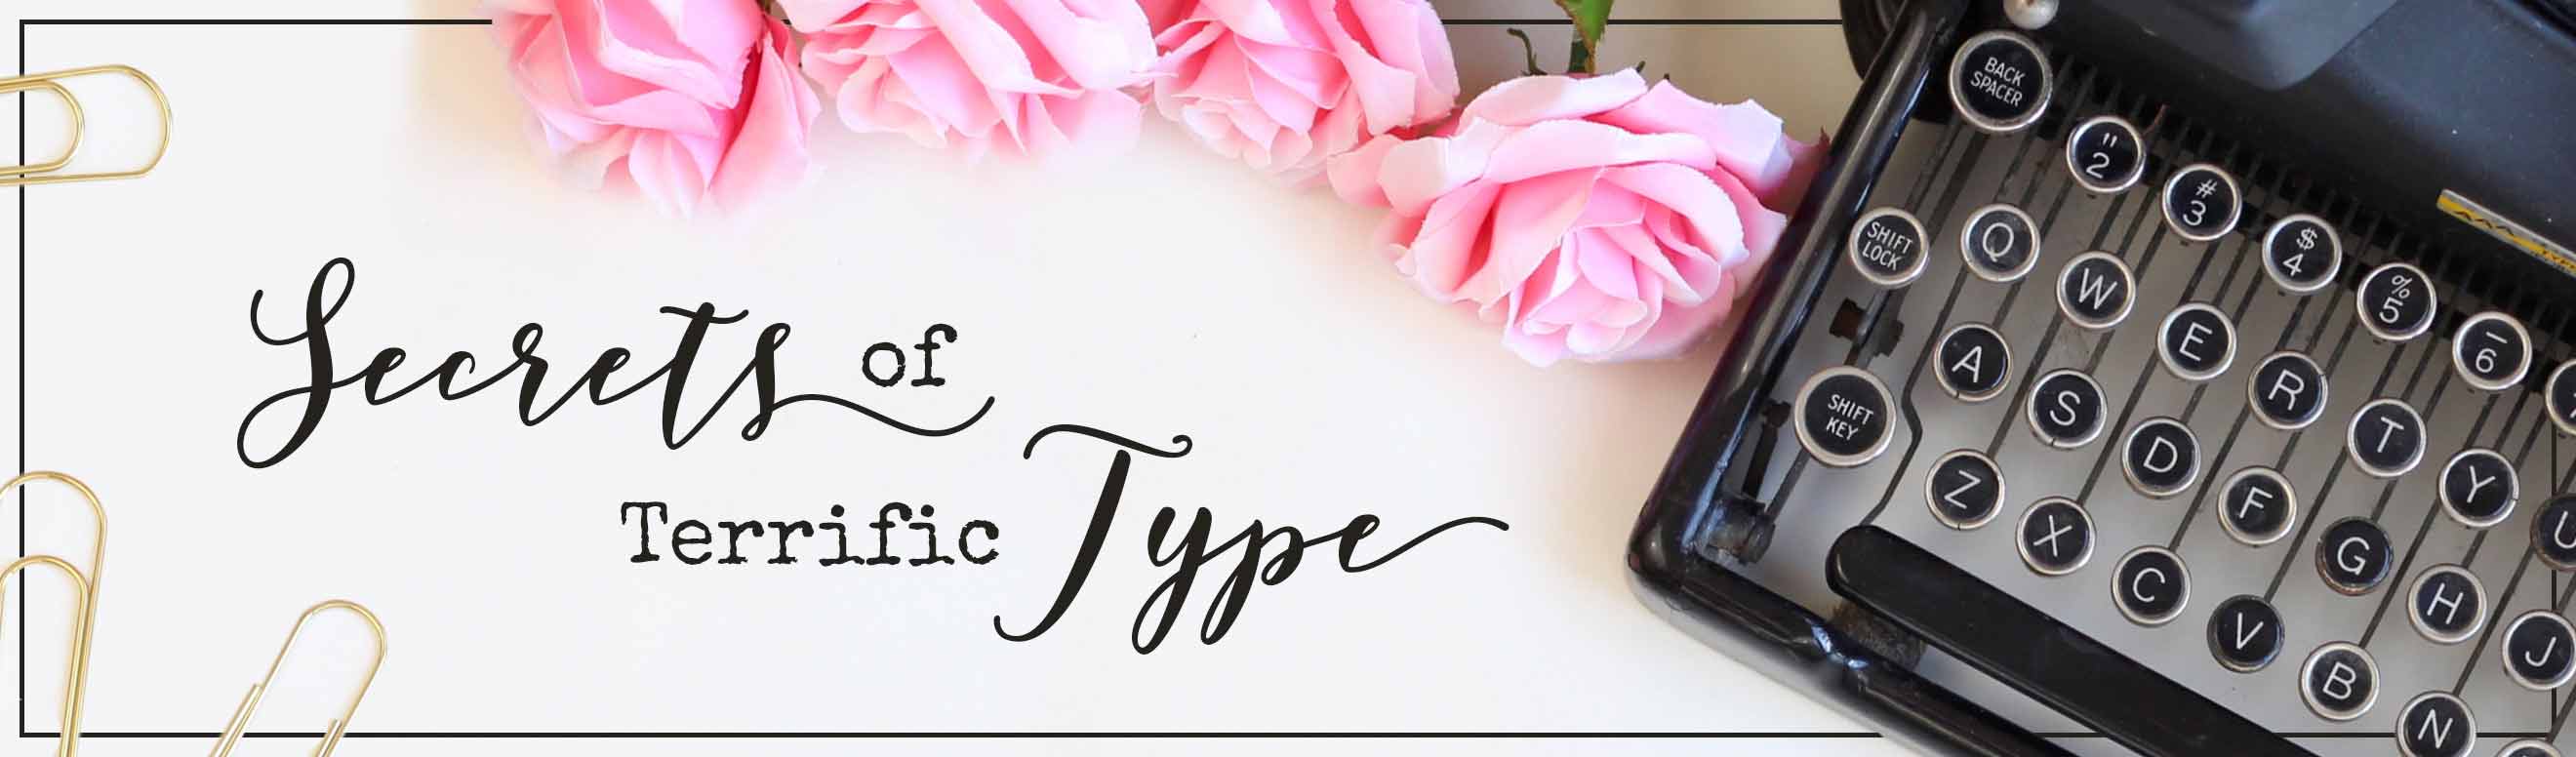 Secrets of Terific Type Class Header